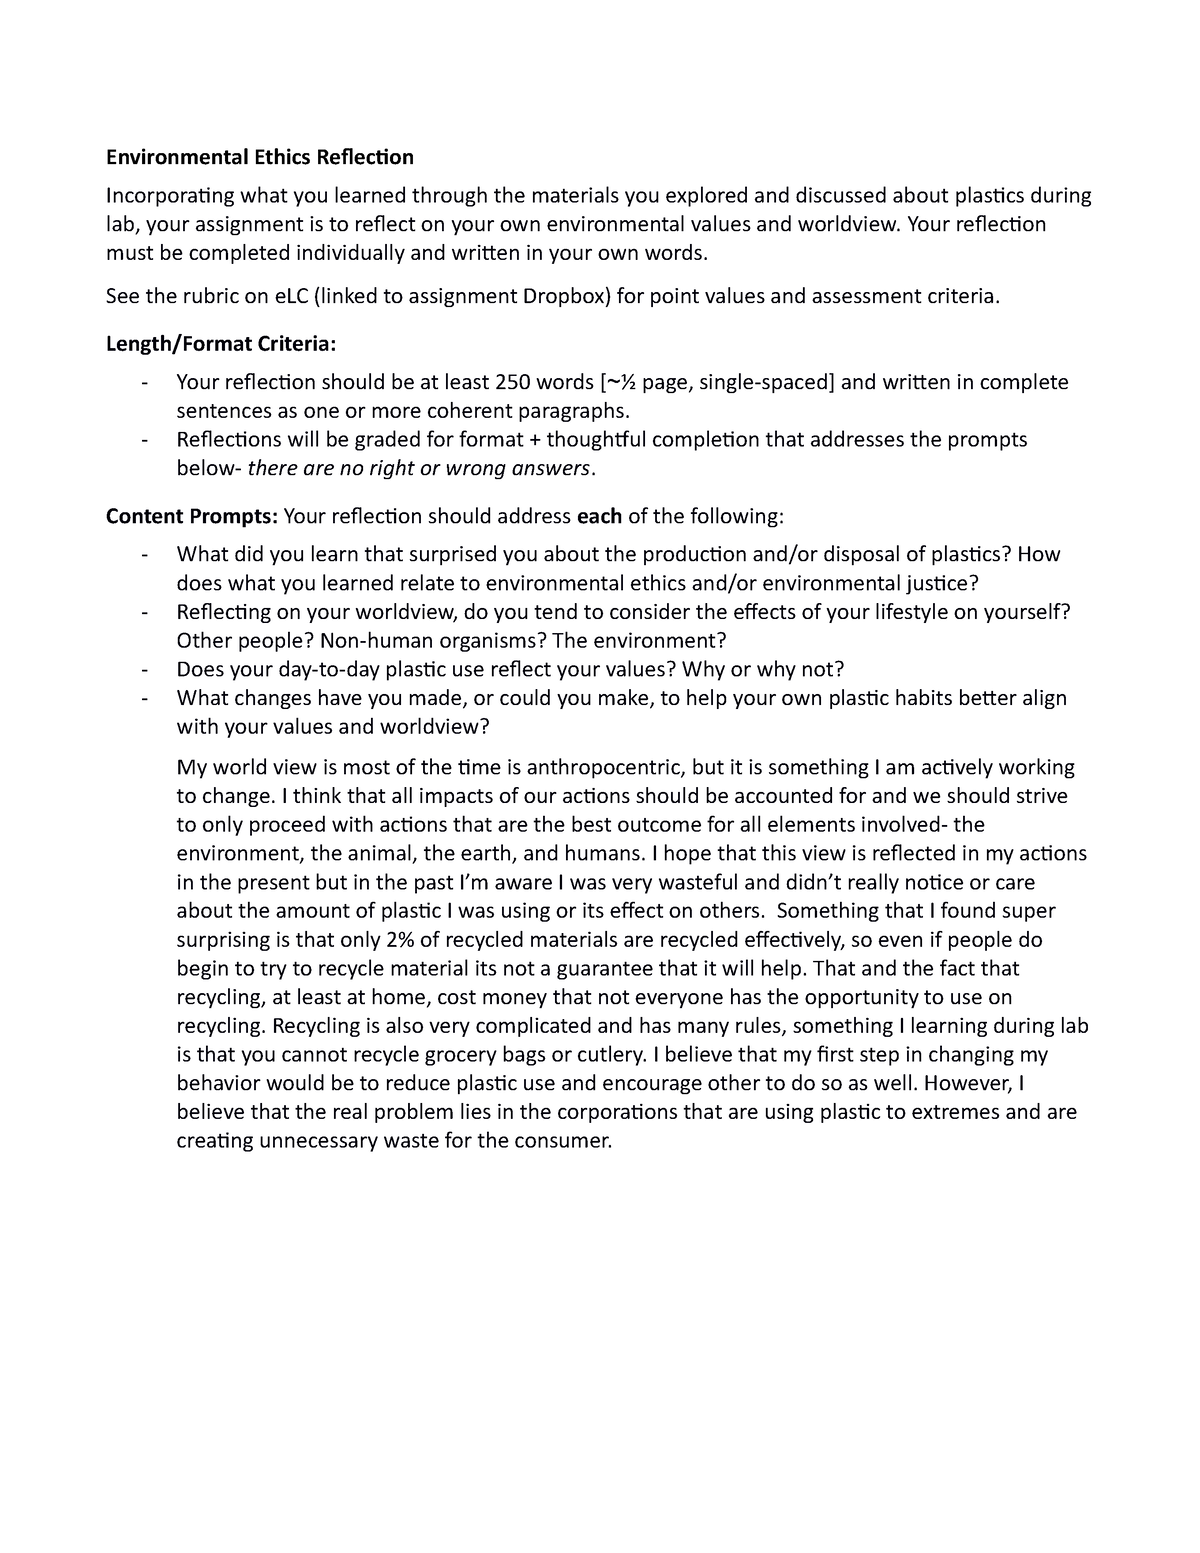 environmental ethics assignment pdf